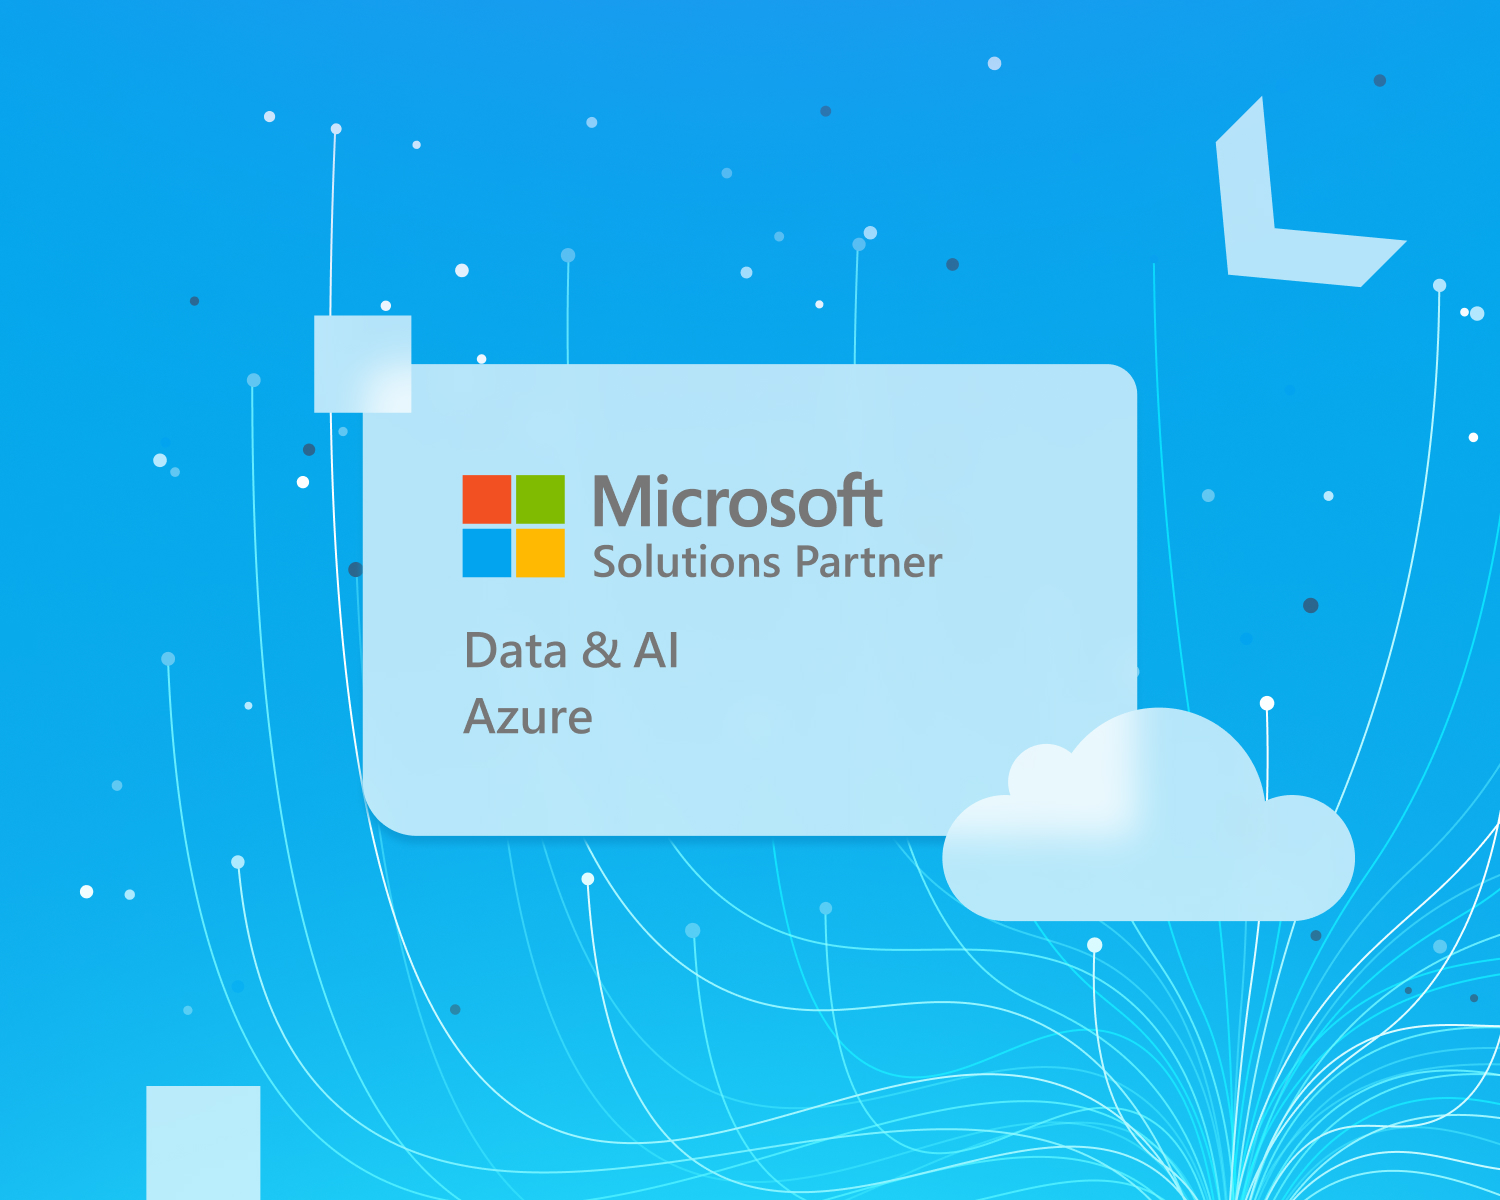 NIX Achieves Microsoft Solutions Partner Status for Data & AI (Azure)